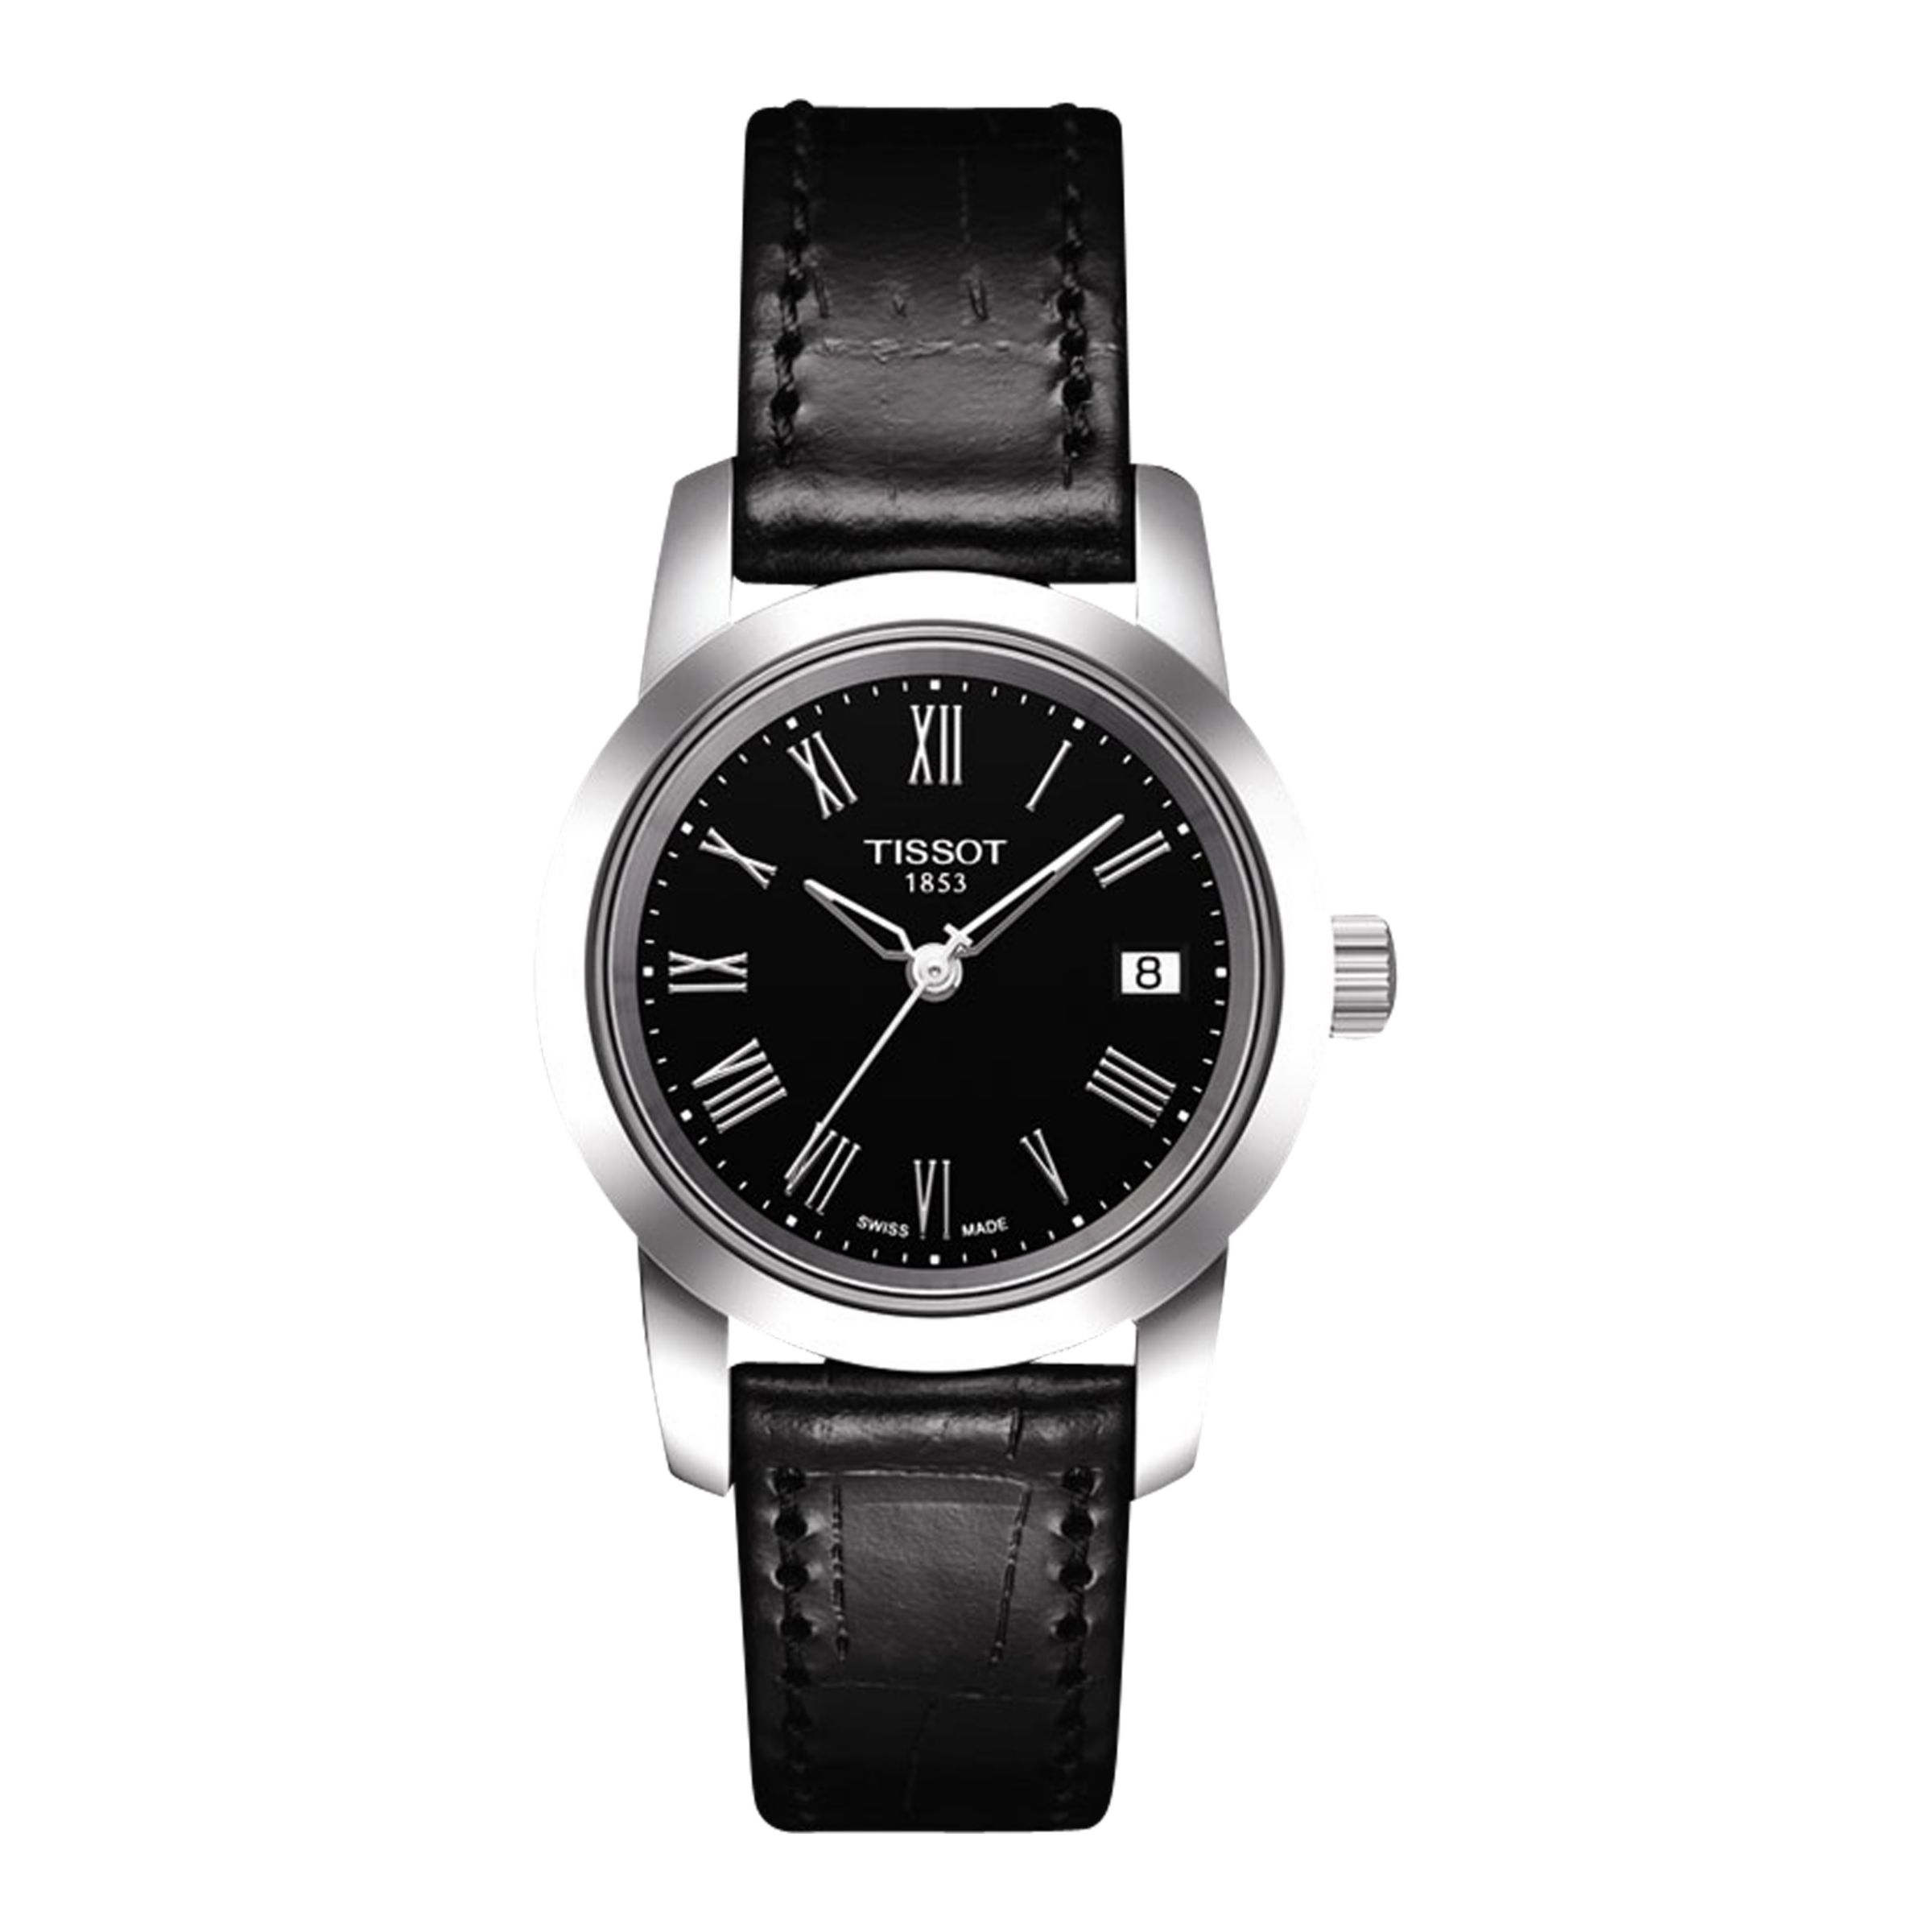 Tissot T0332101605300 Women's Classic Dream Date Leather Strap Watch, Black